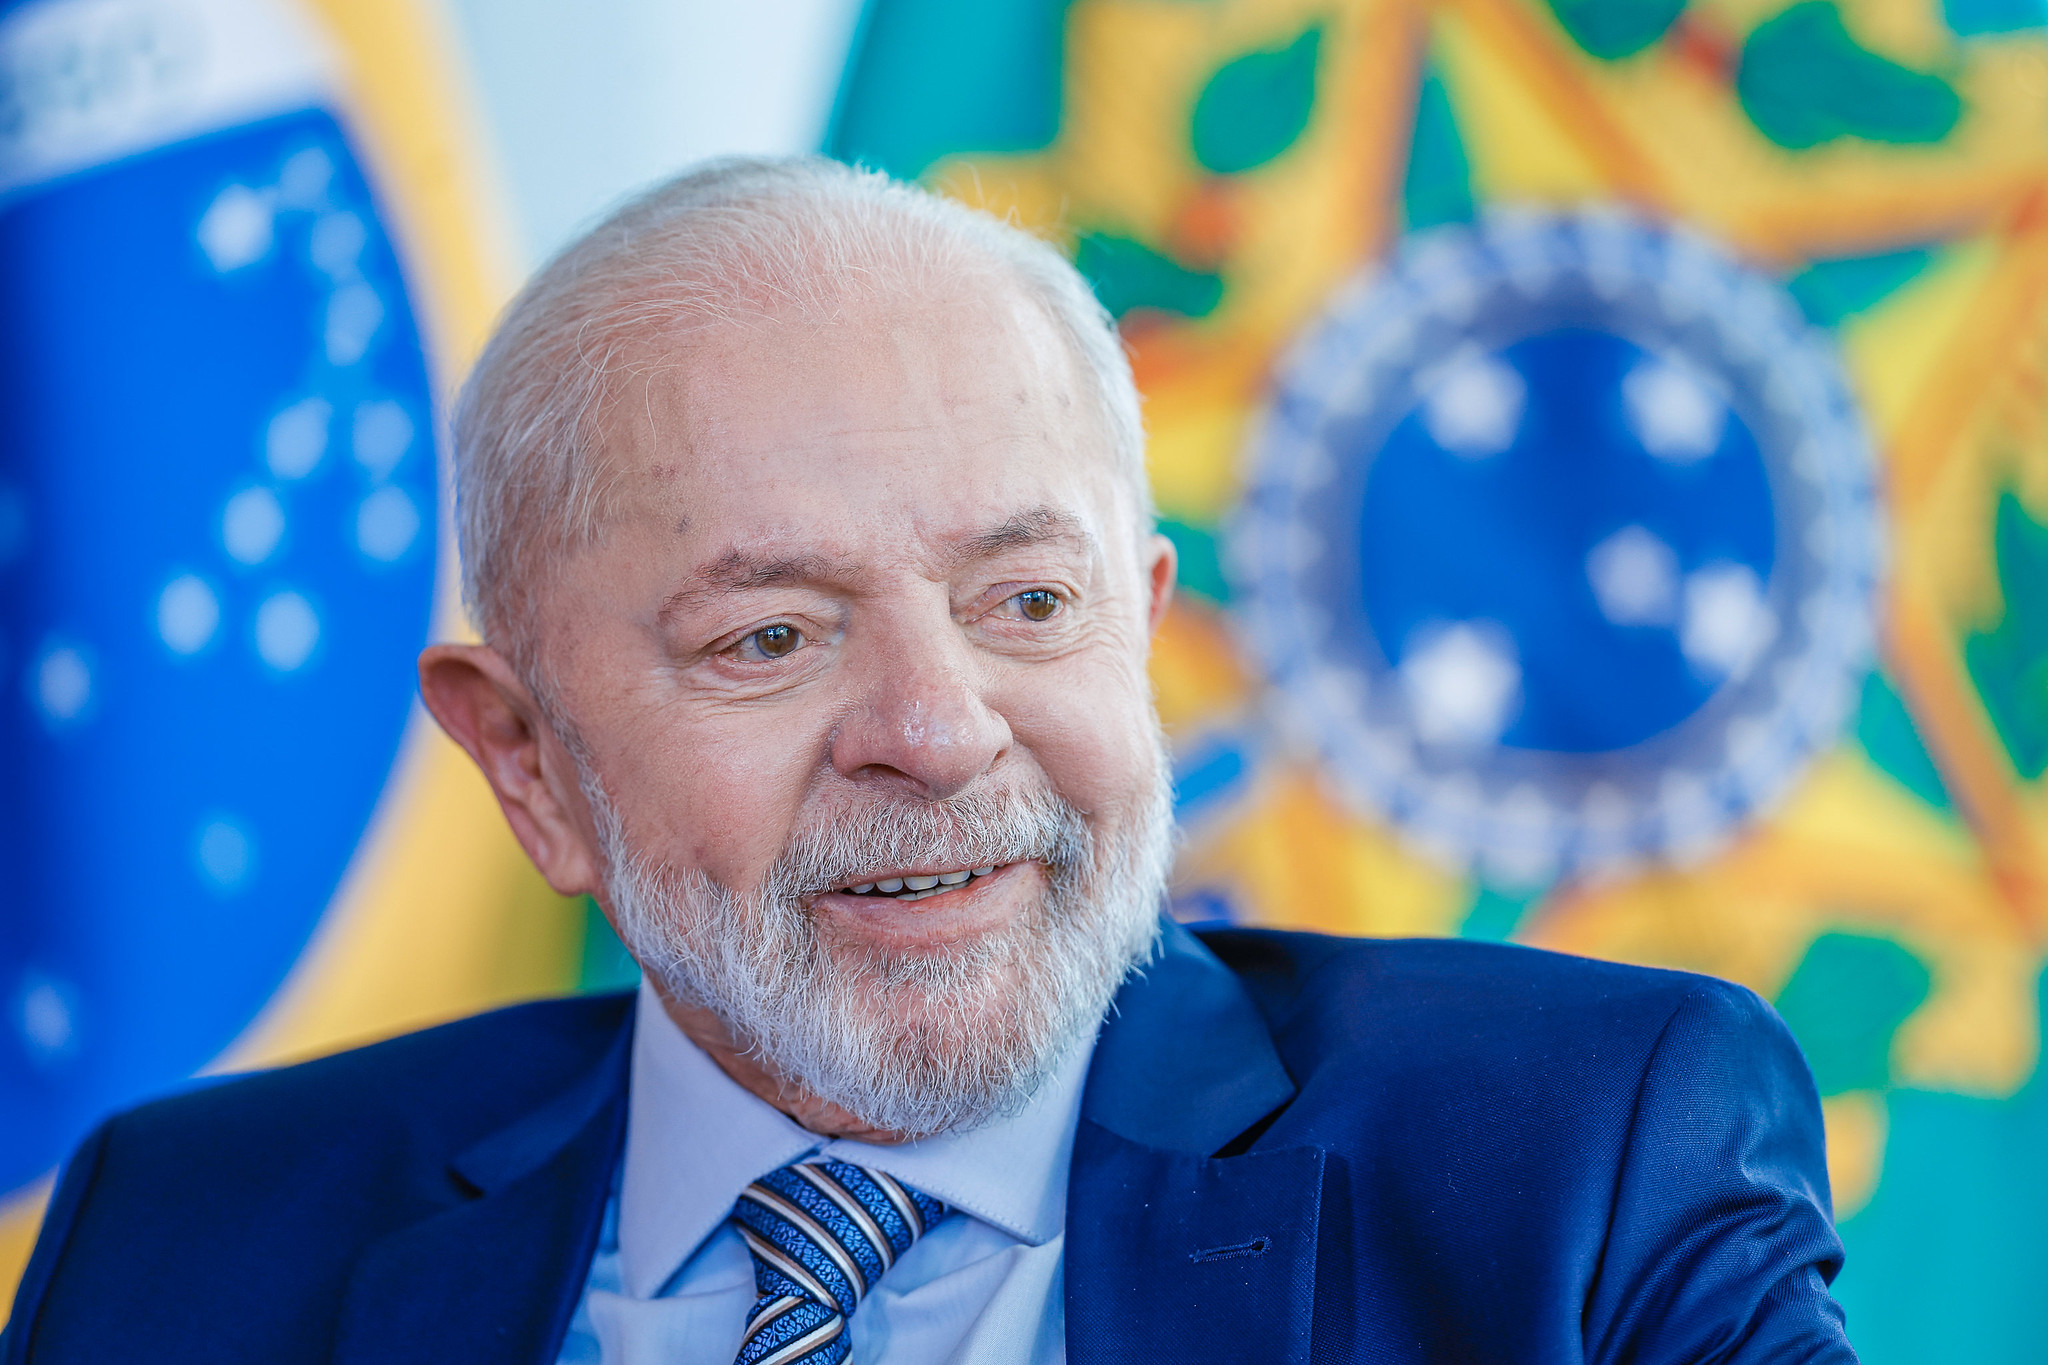 Luiz Inácio Lula da Silva (PT), presidente da República (Foto: Ricardo Stuckert/PR)